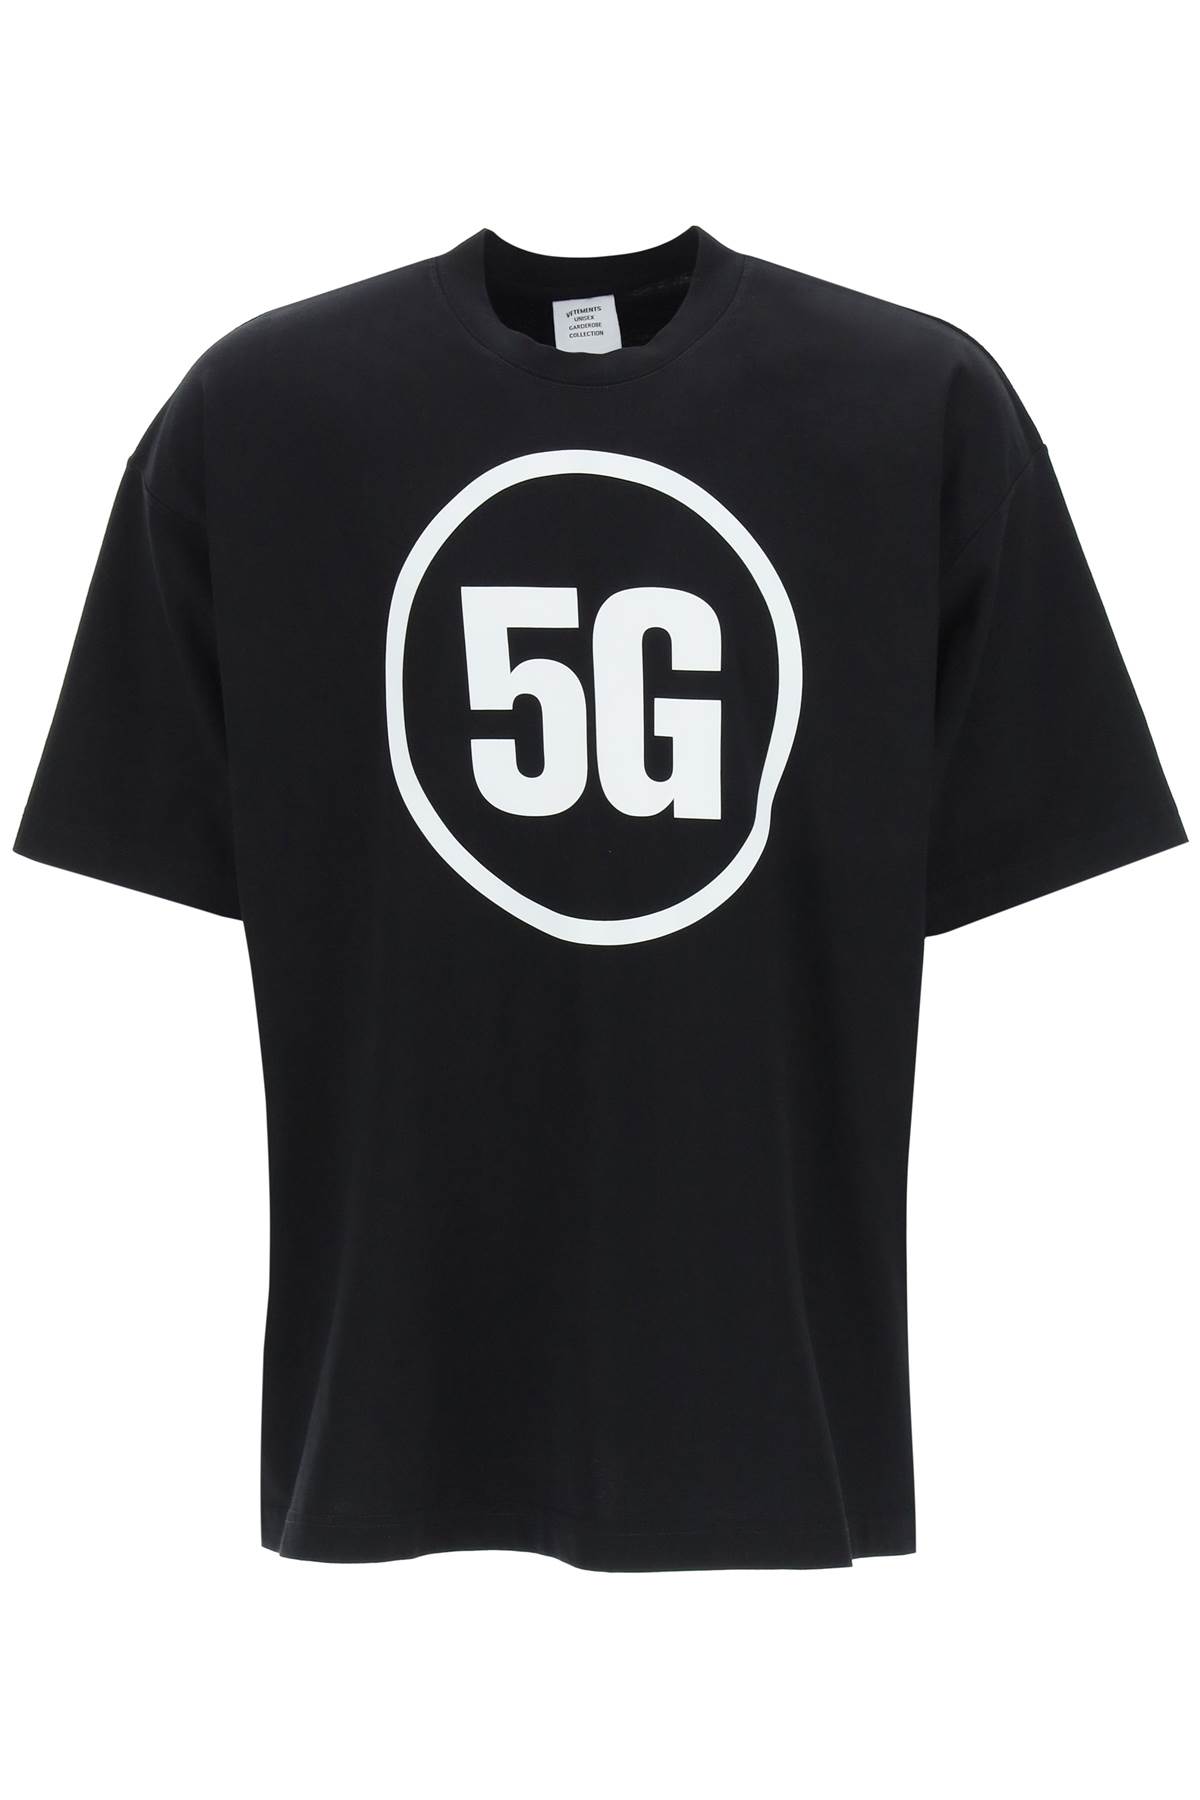 VETEMENTS 5g T-shirt